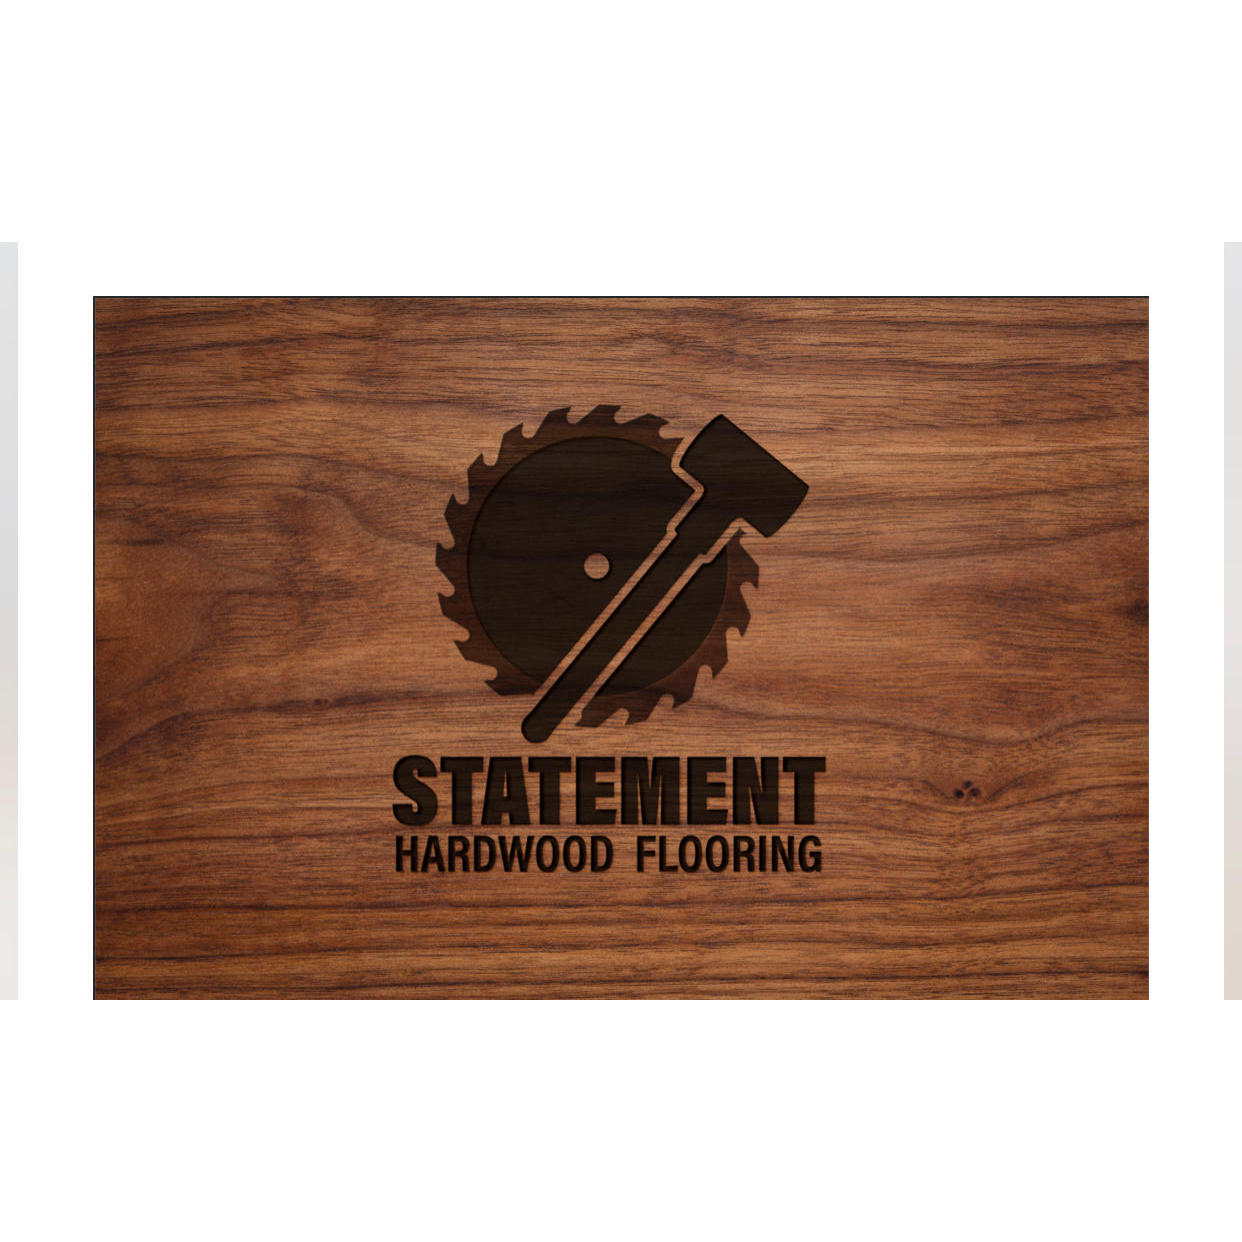 Statement Hardwood Flooring - Salt Lake City, UT - (385)955-3743 | ShowMeLocal.com